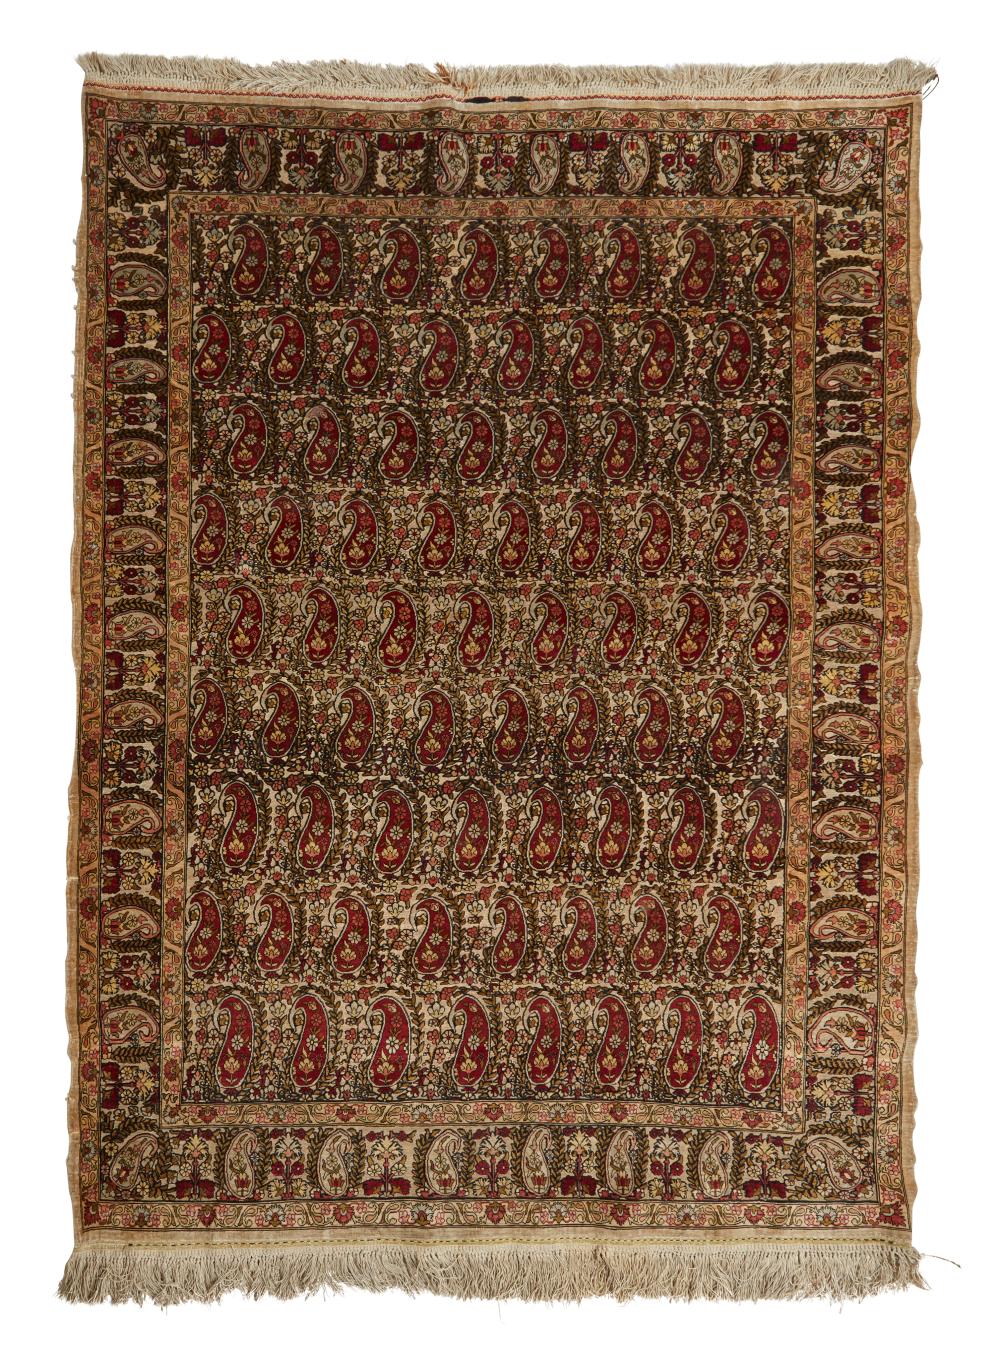 A TURKISH RUGA Turkish rug,  20th century